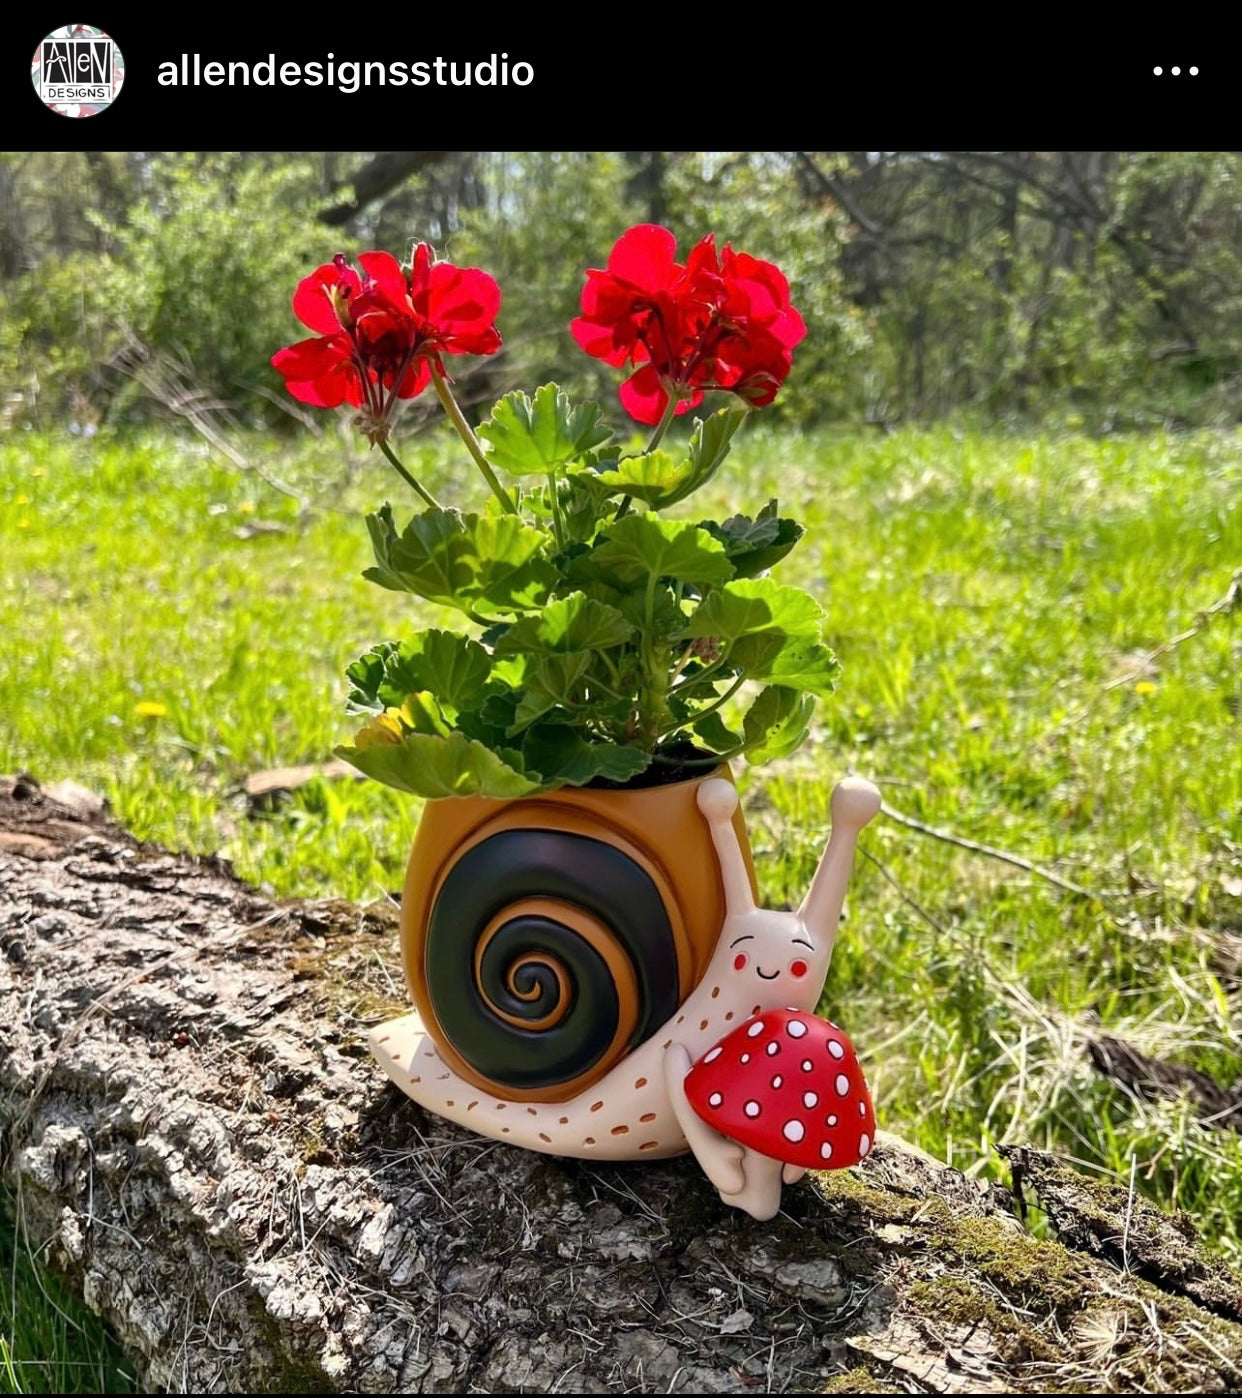 Snail Mushroom Pot Plant Planter Garden - The Renmy Store Homewares & Gifts 